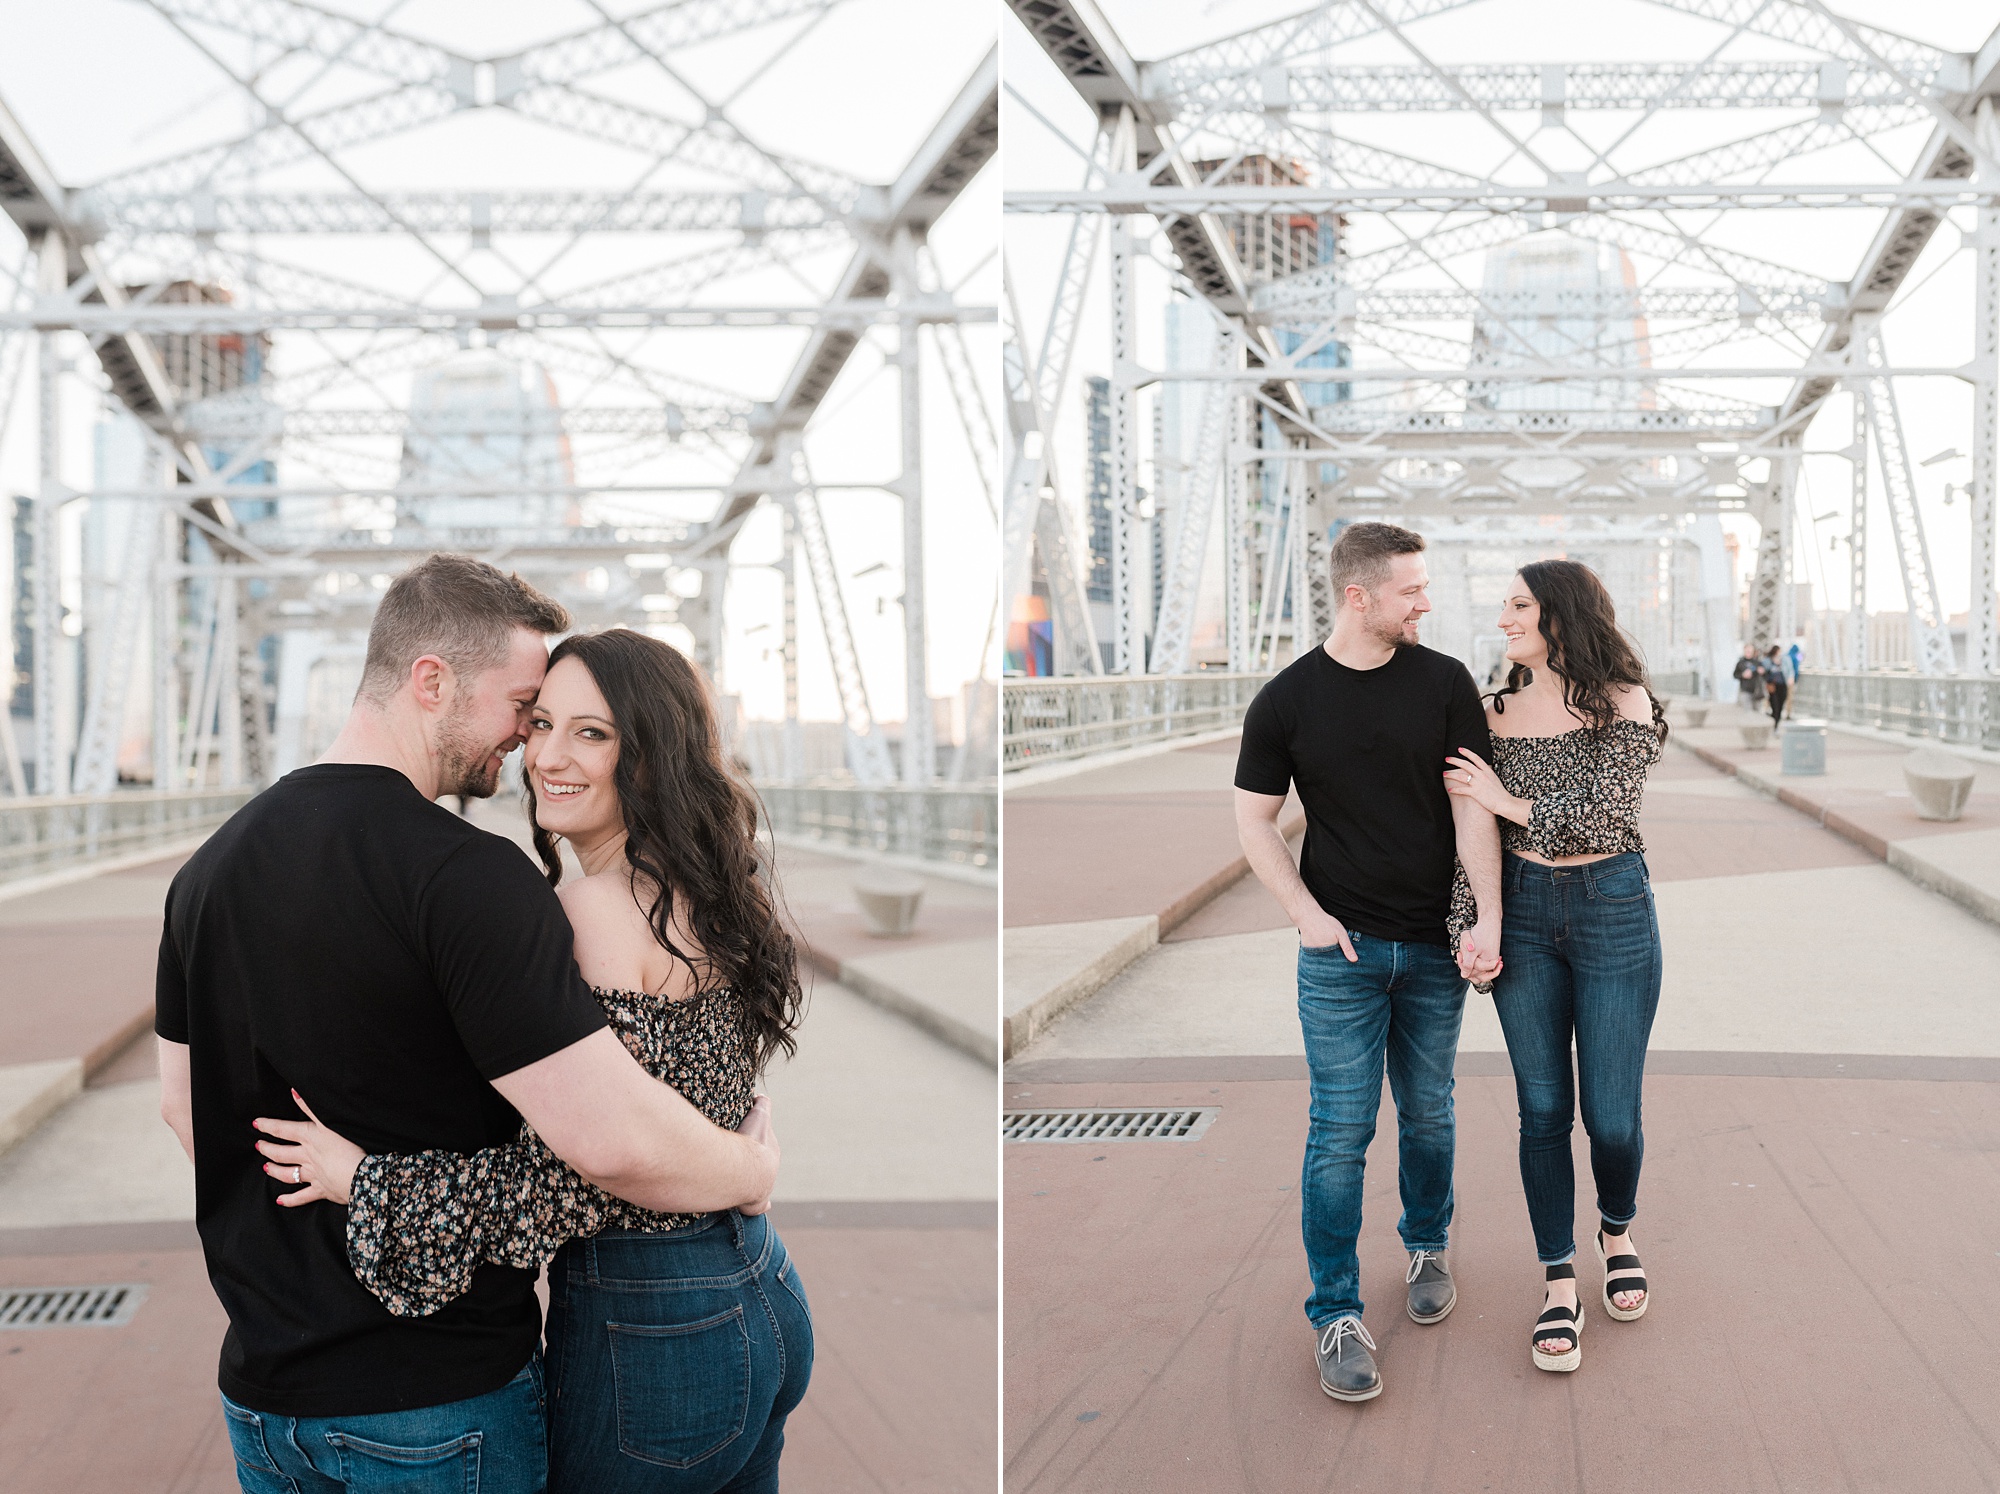 downtown Nashville engagement session on Pedestrian Bridge with Nashville photographer Dolly DeLong Photography